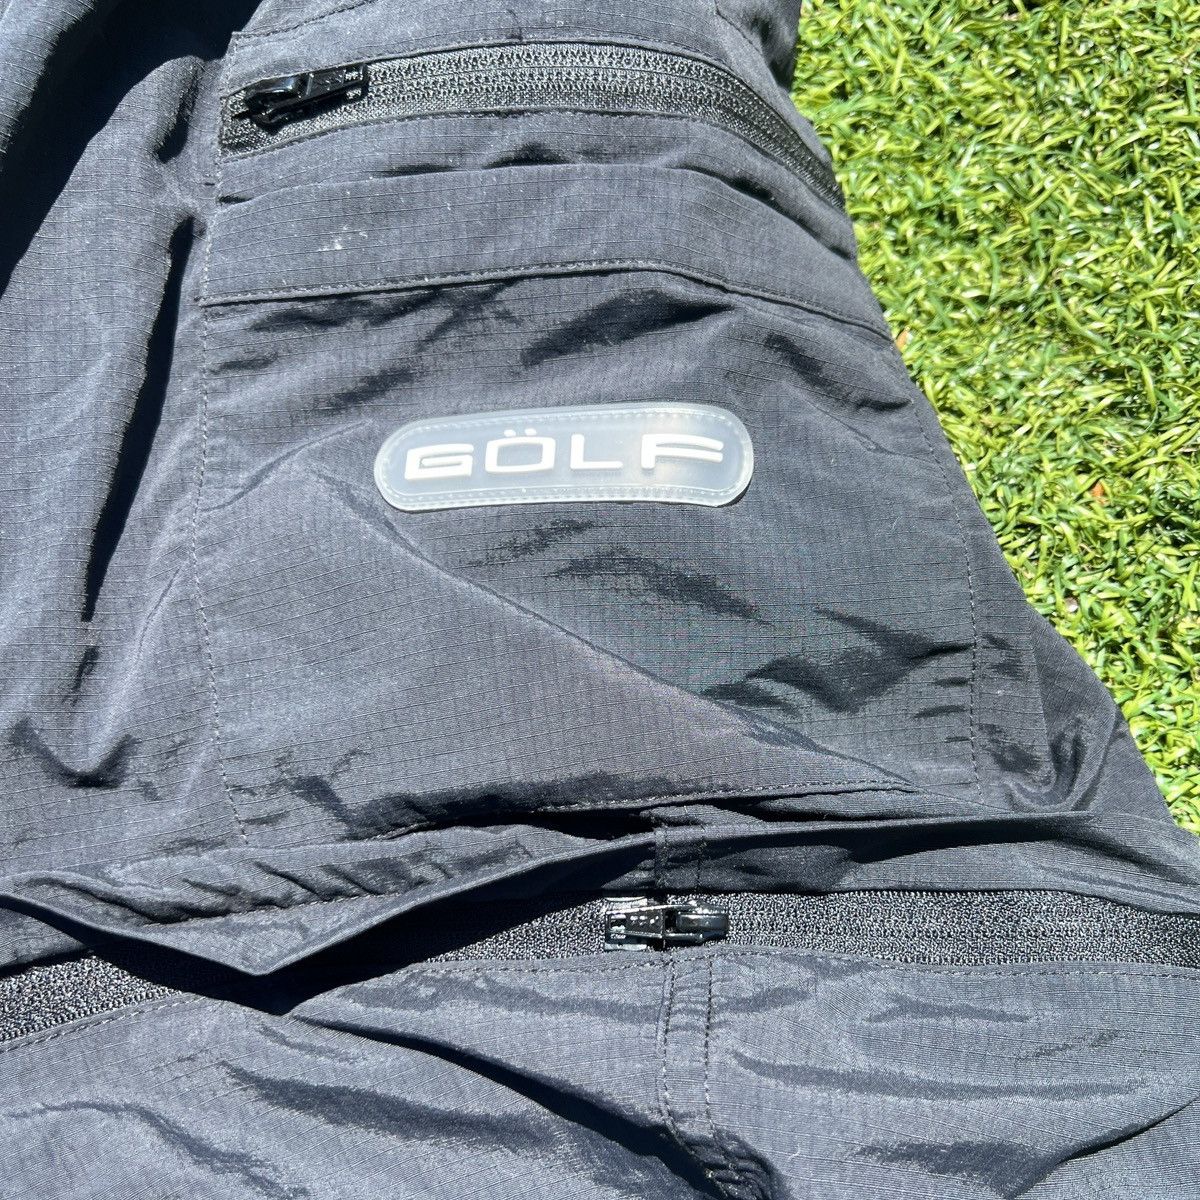 Golf Wang Golf Wang Tyrie Pants Black Size US 32 / EU 48 - 3 Thumbnail